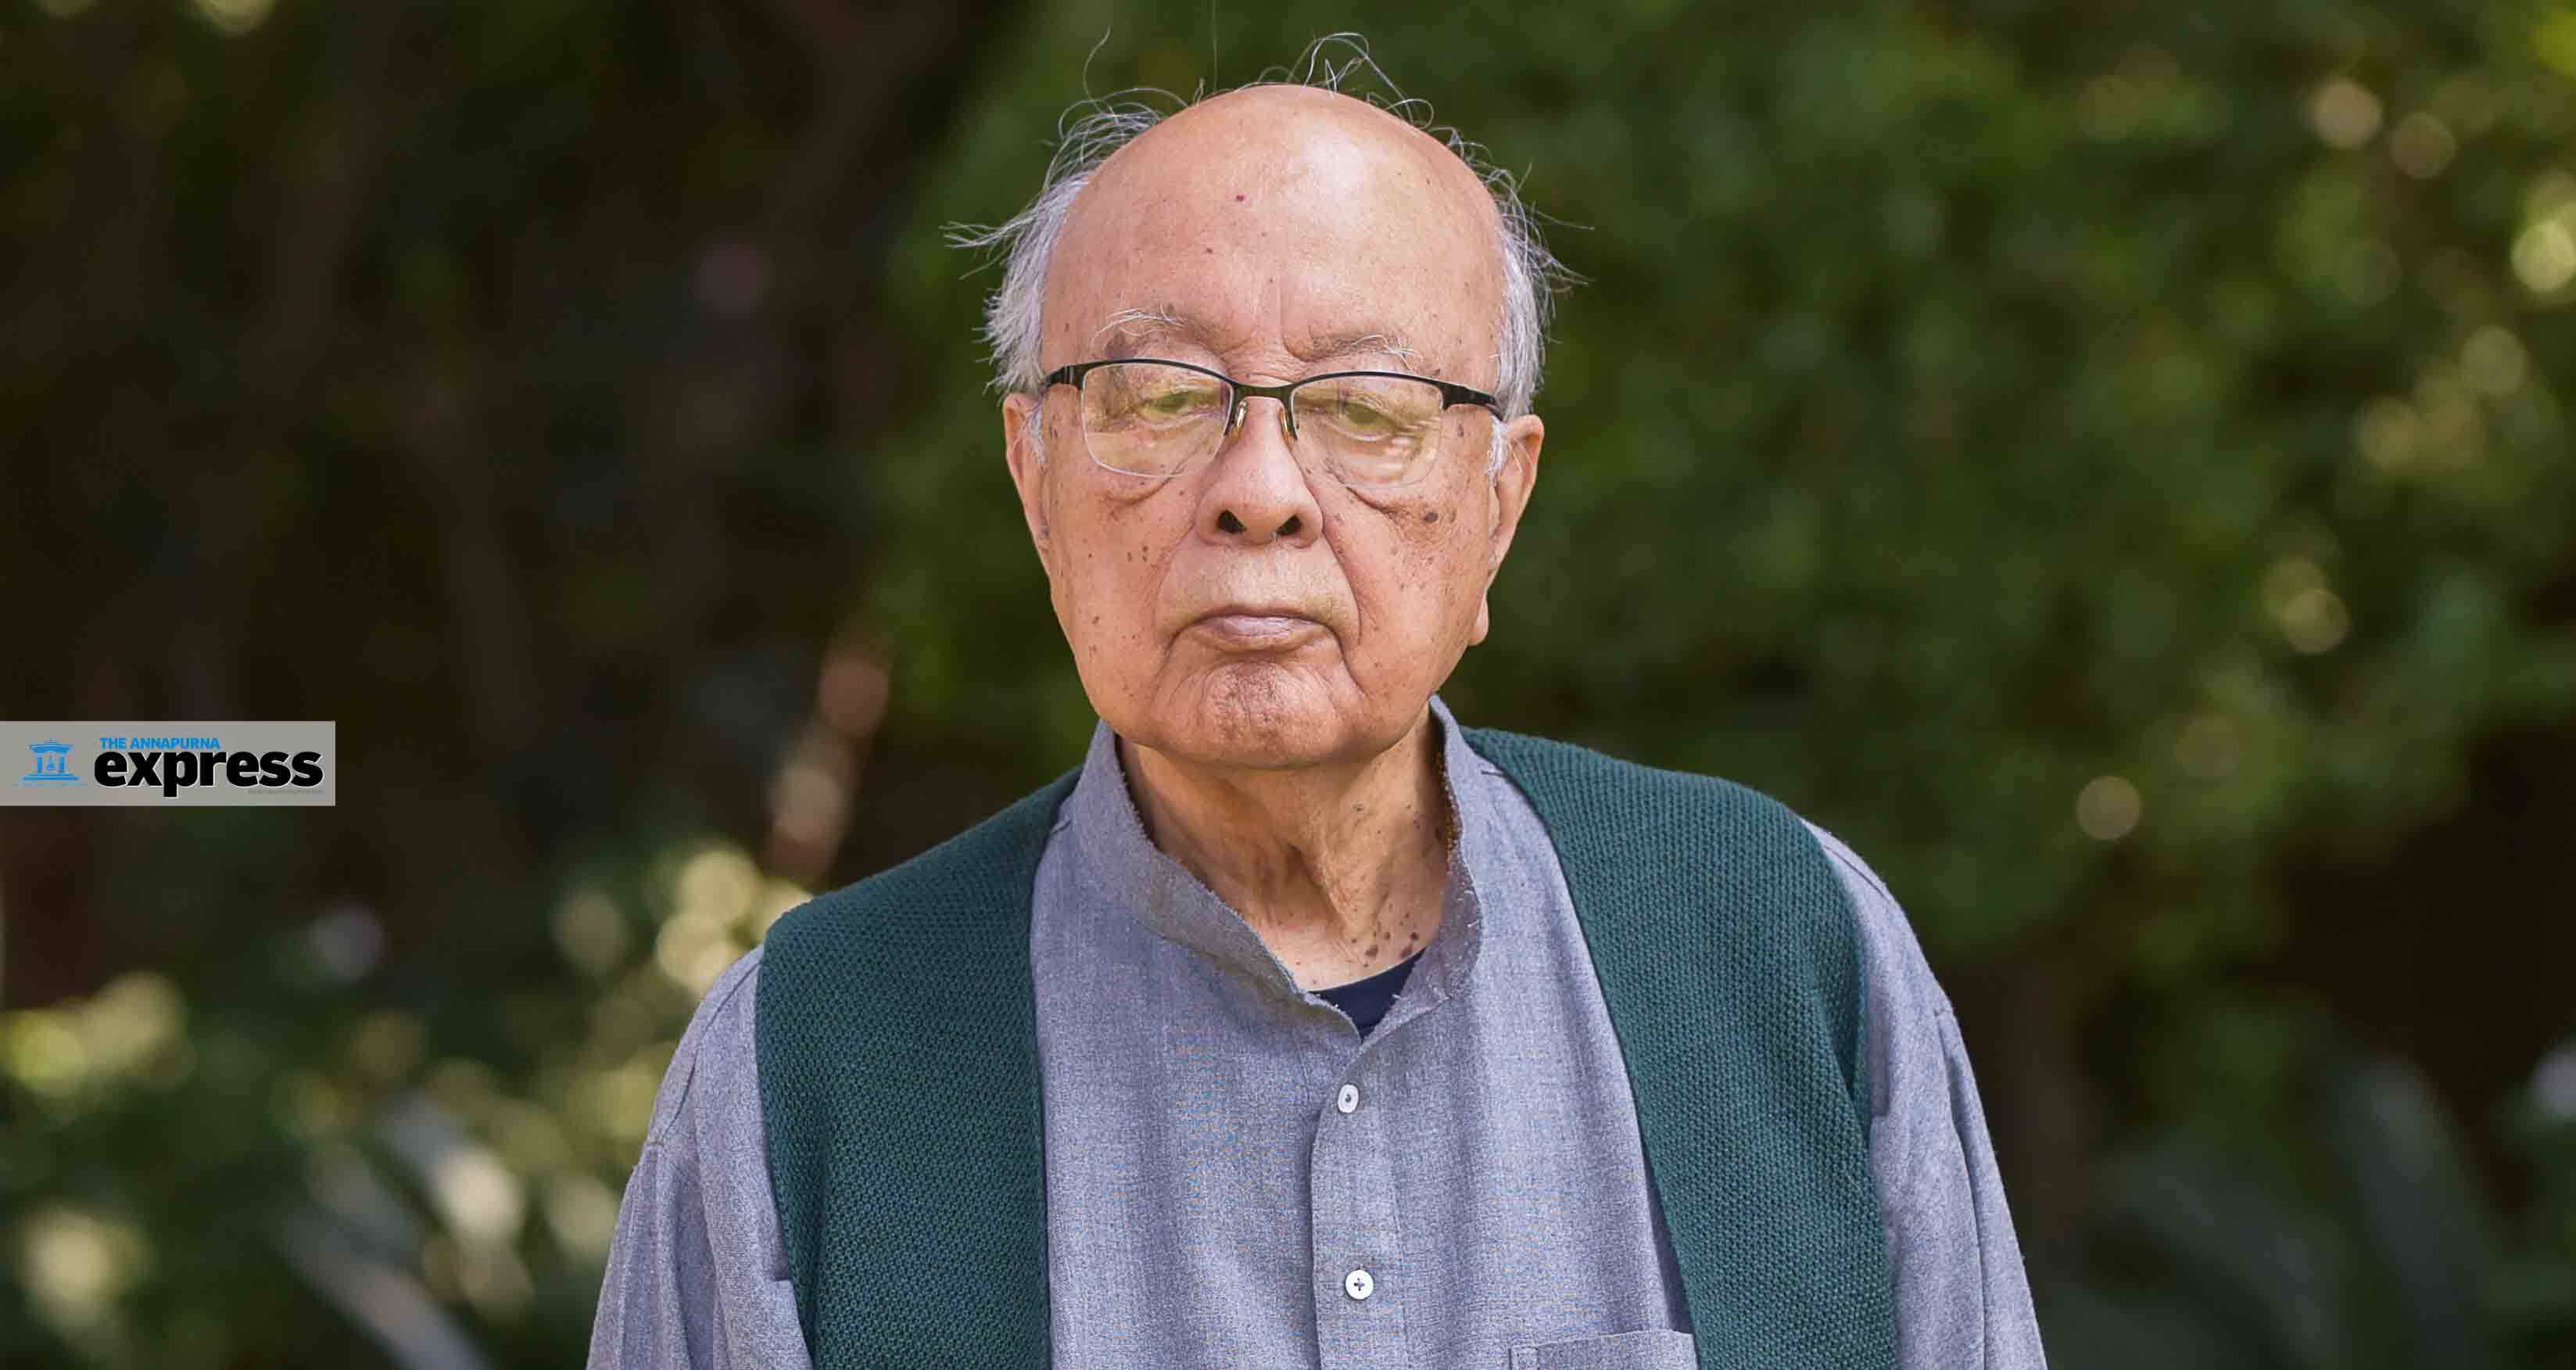 Himalaya Shumsher Rana obituary: Passing of a pioneer